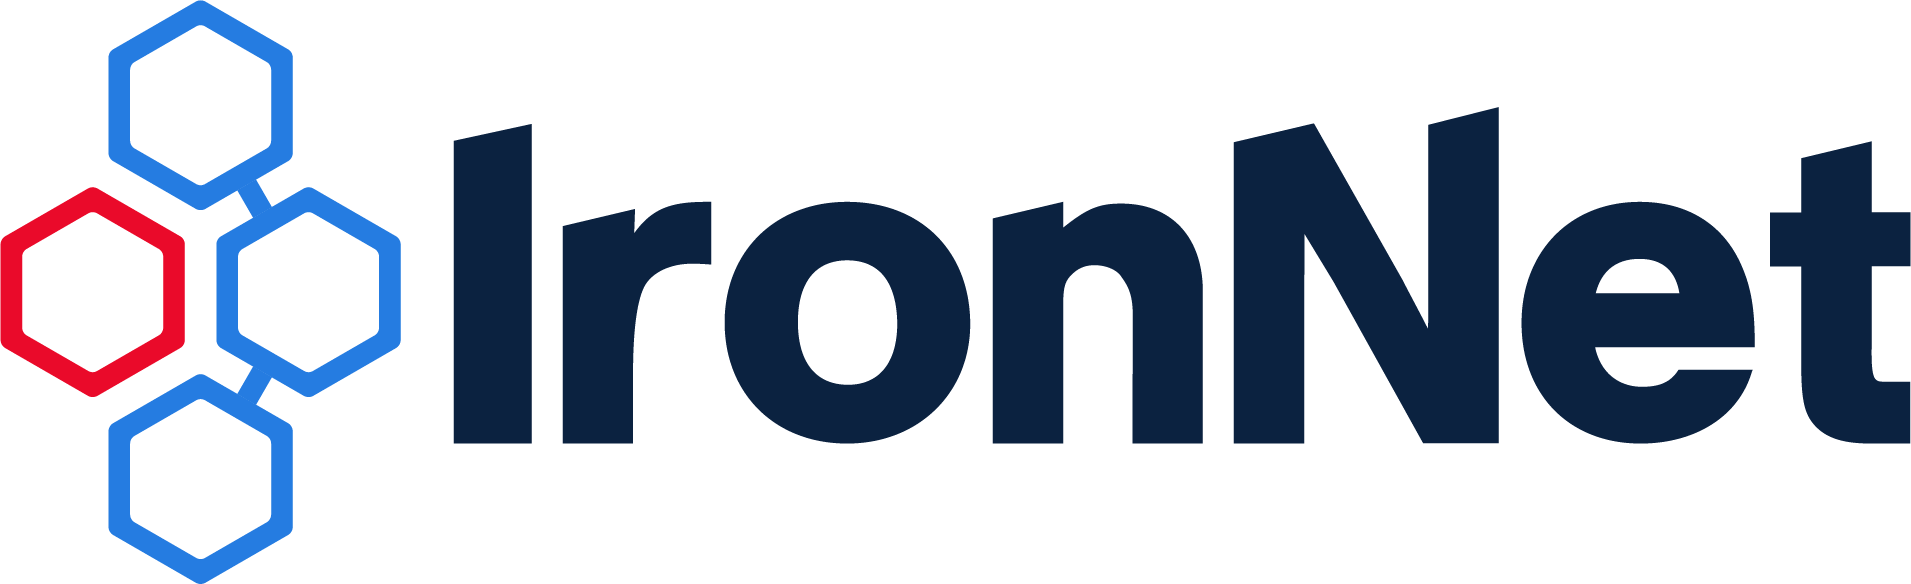 Iron Net Logo.png